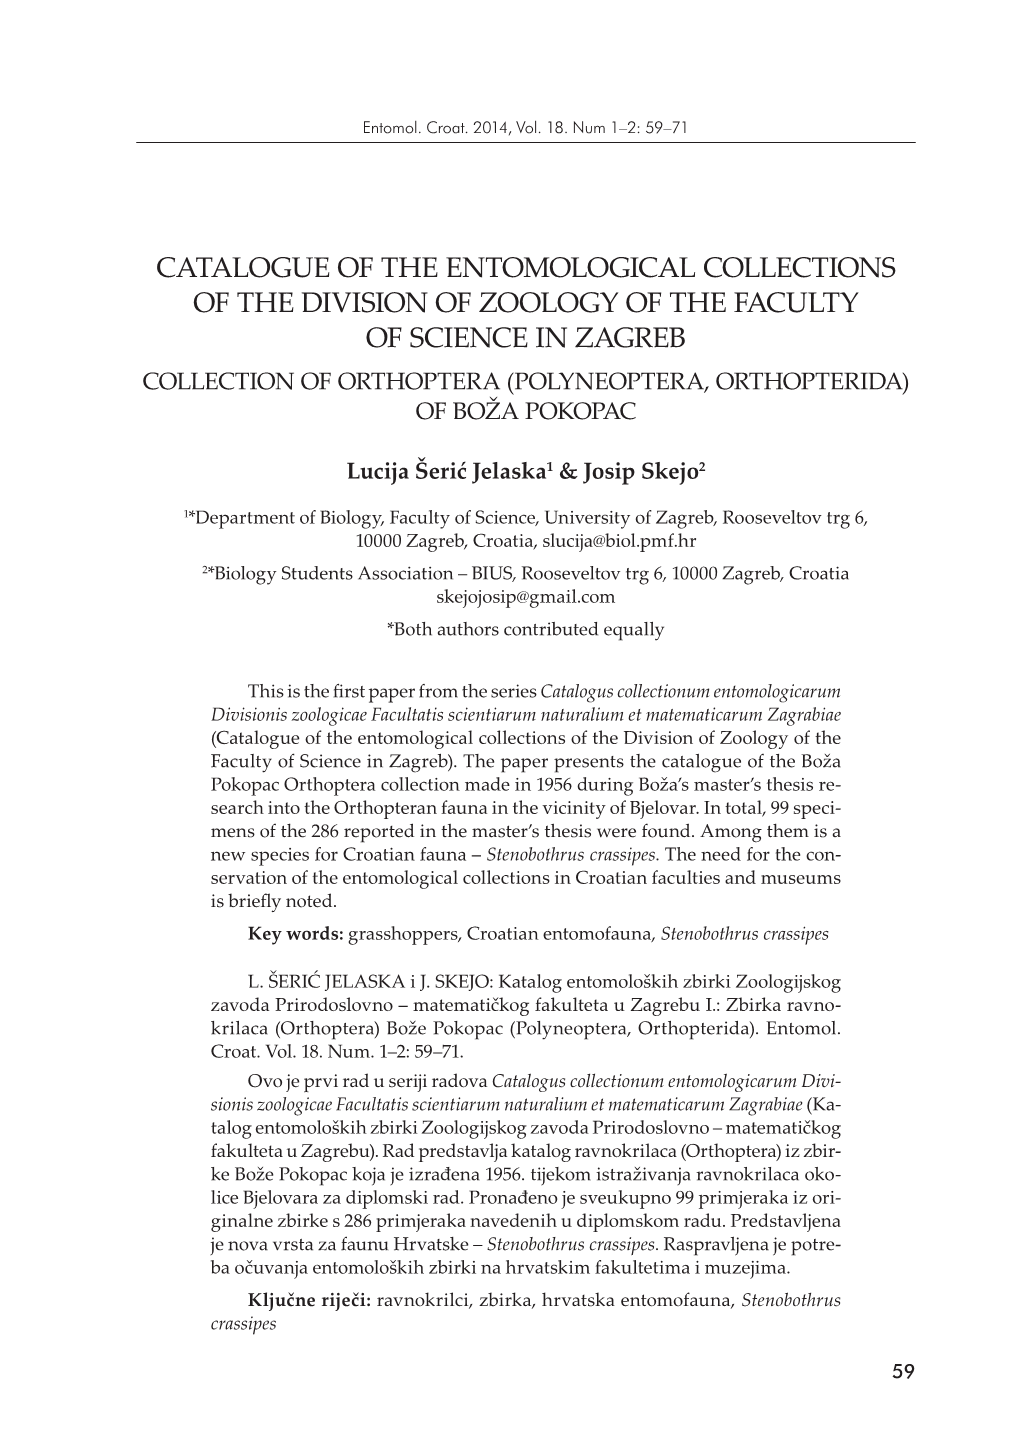 Catalogue of the Entomological Collections